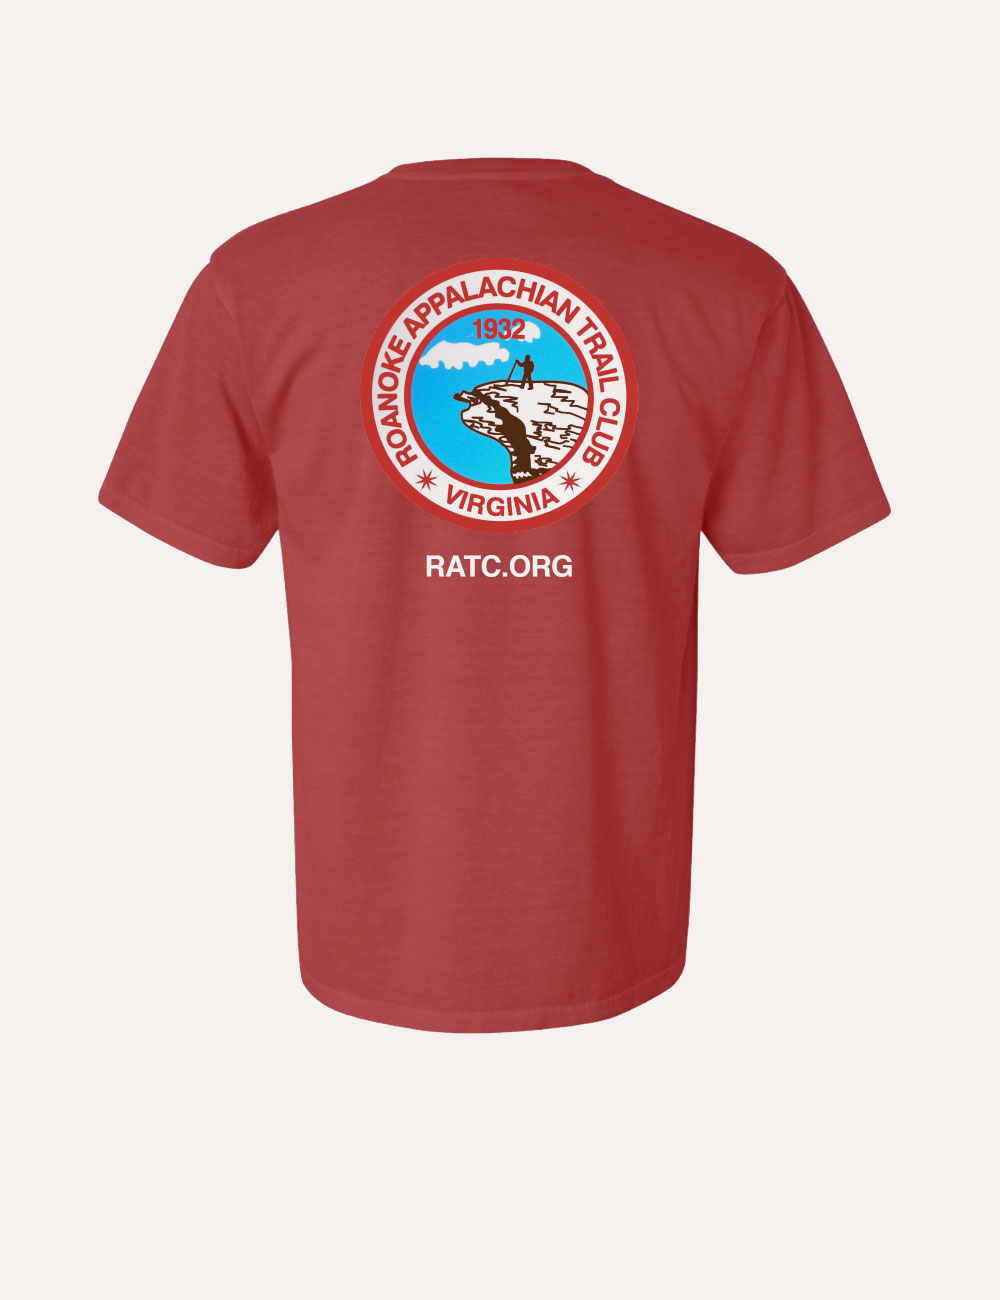 Roanoke Appalachian Trail Club - Merch - Women's V-neck T-Shirt - Back